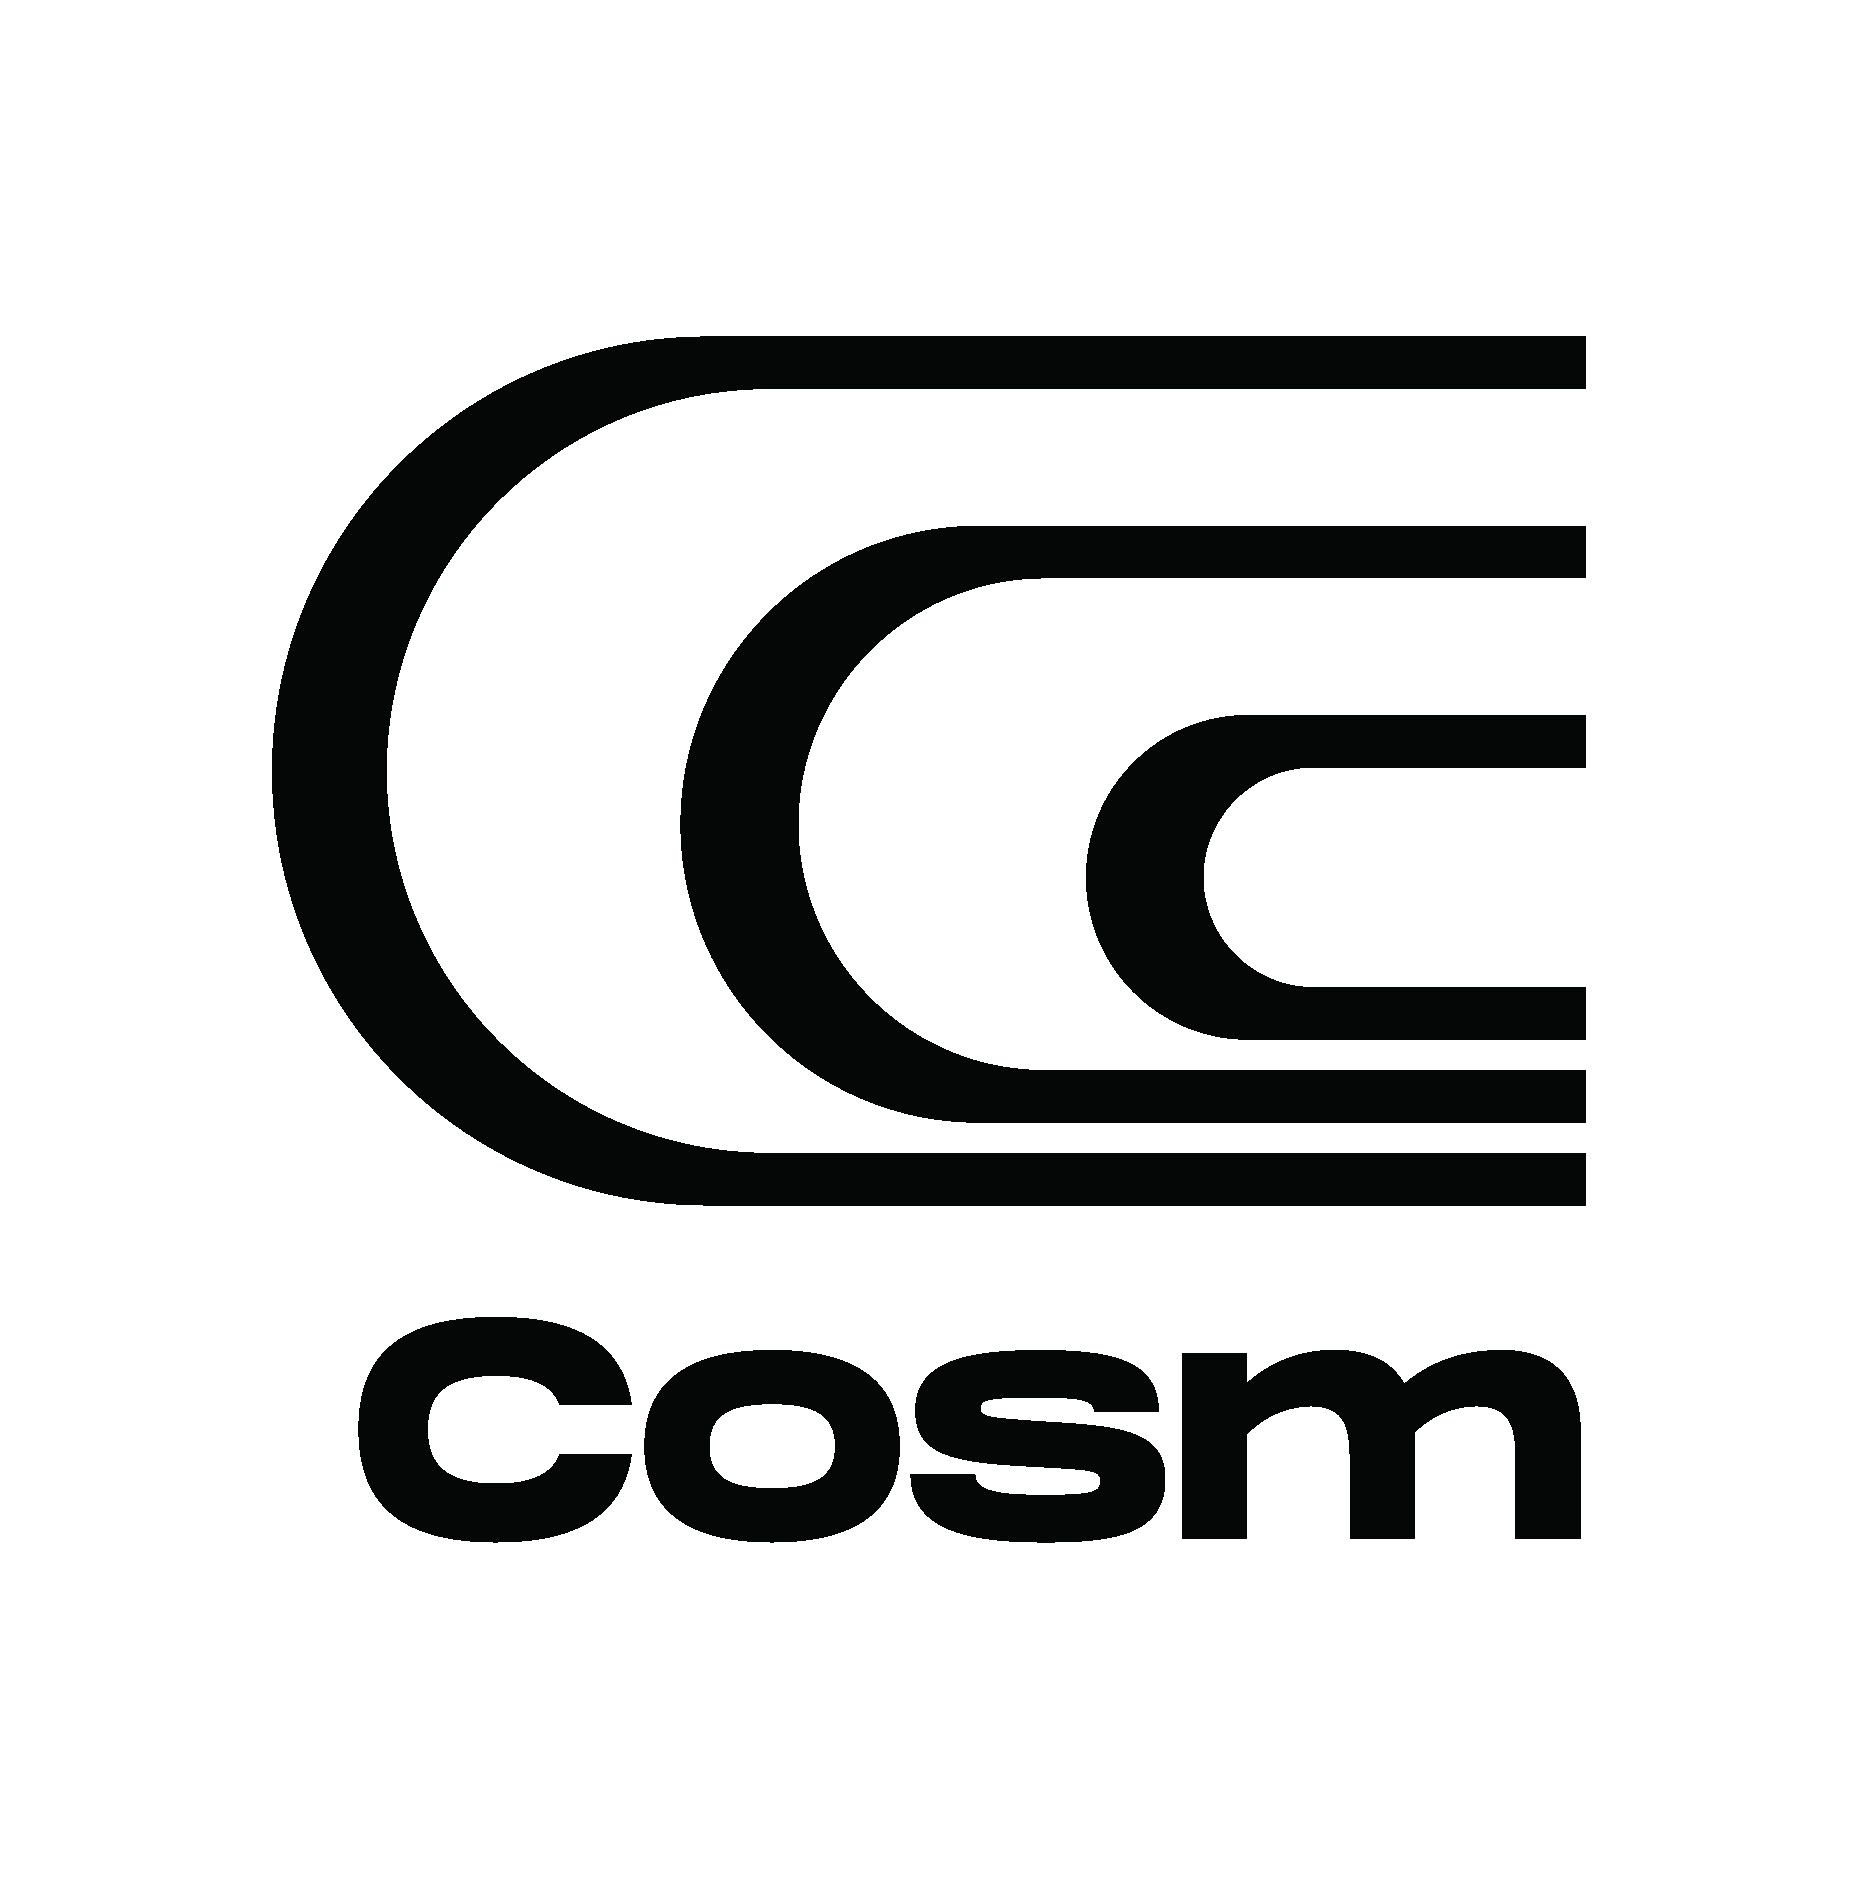 Cosm logo